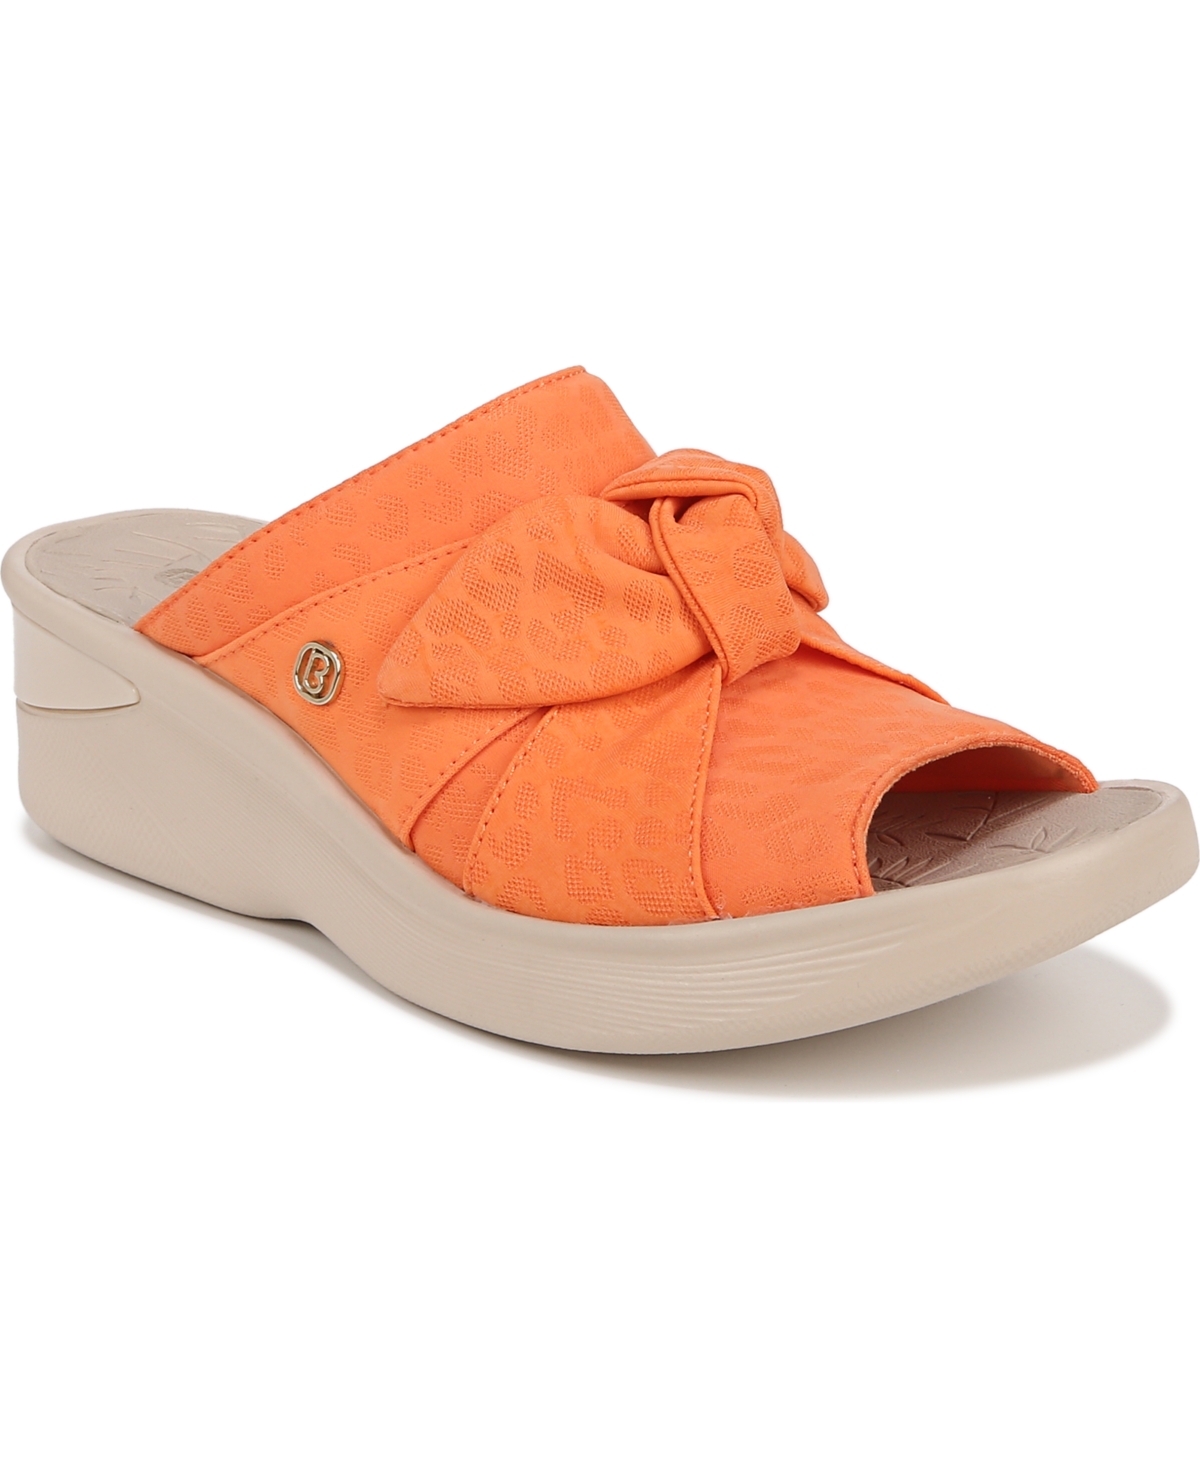 Smile Washable Slide Wedge Sandals - Orange Fabric